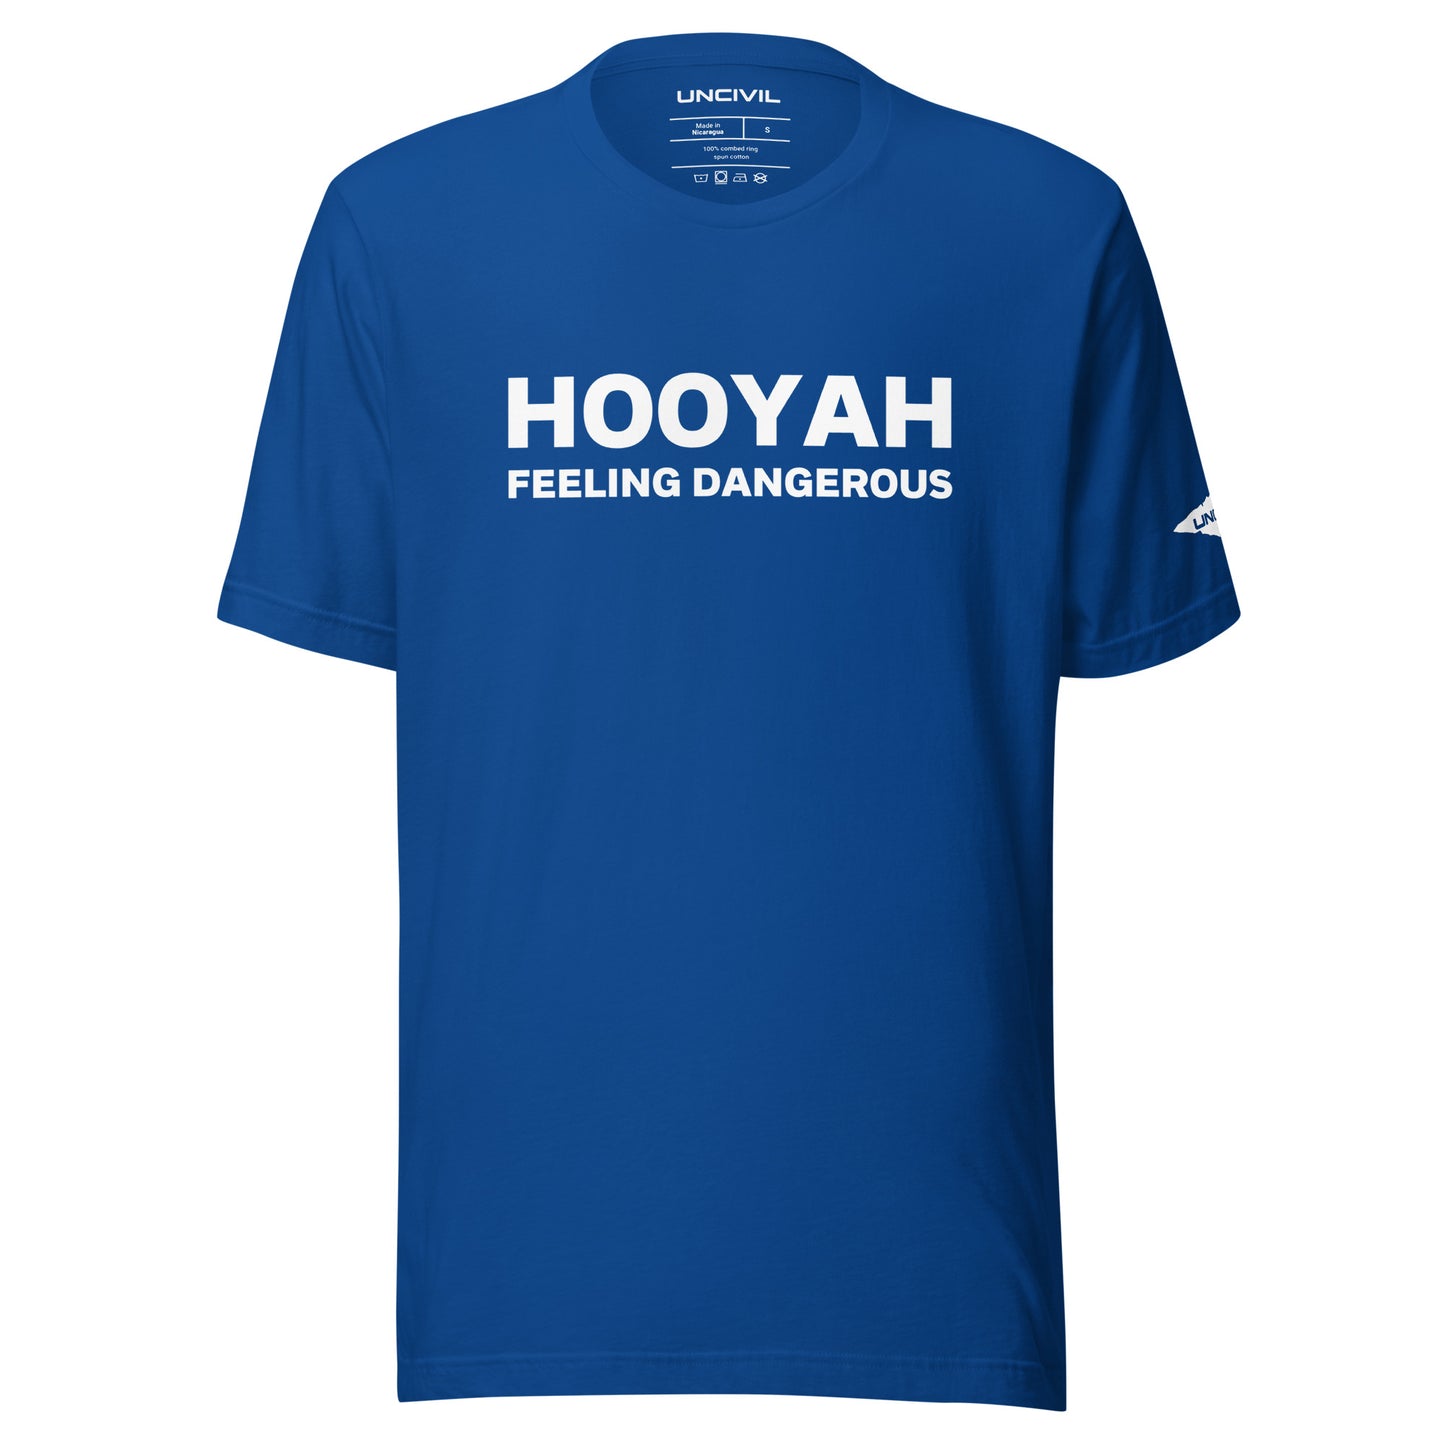 Hooyah, Feeling Dangerous shirt. The term "hooyah" is a U.S. Navy SEALs battle cry often used as motivation. Royal Blue unisex t-shirt.